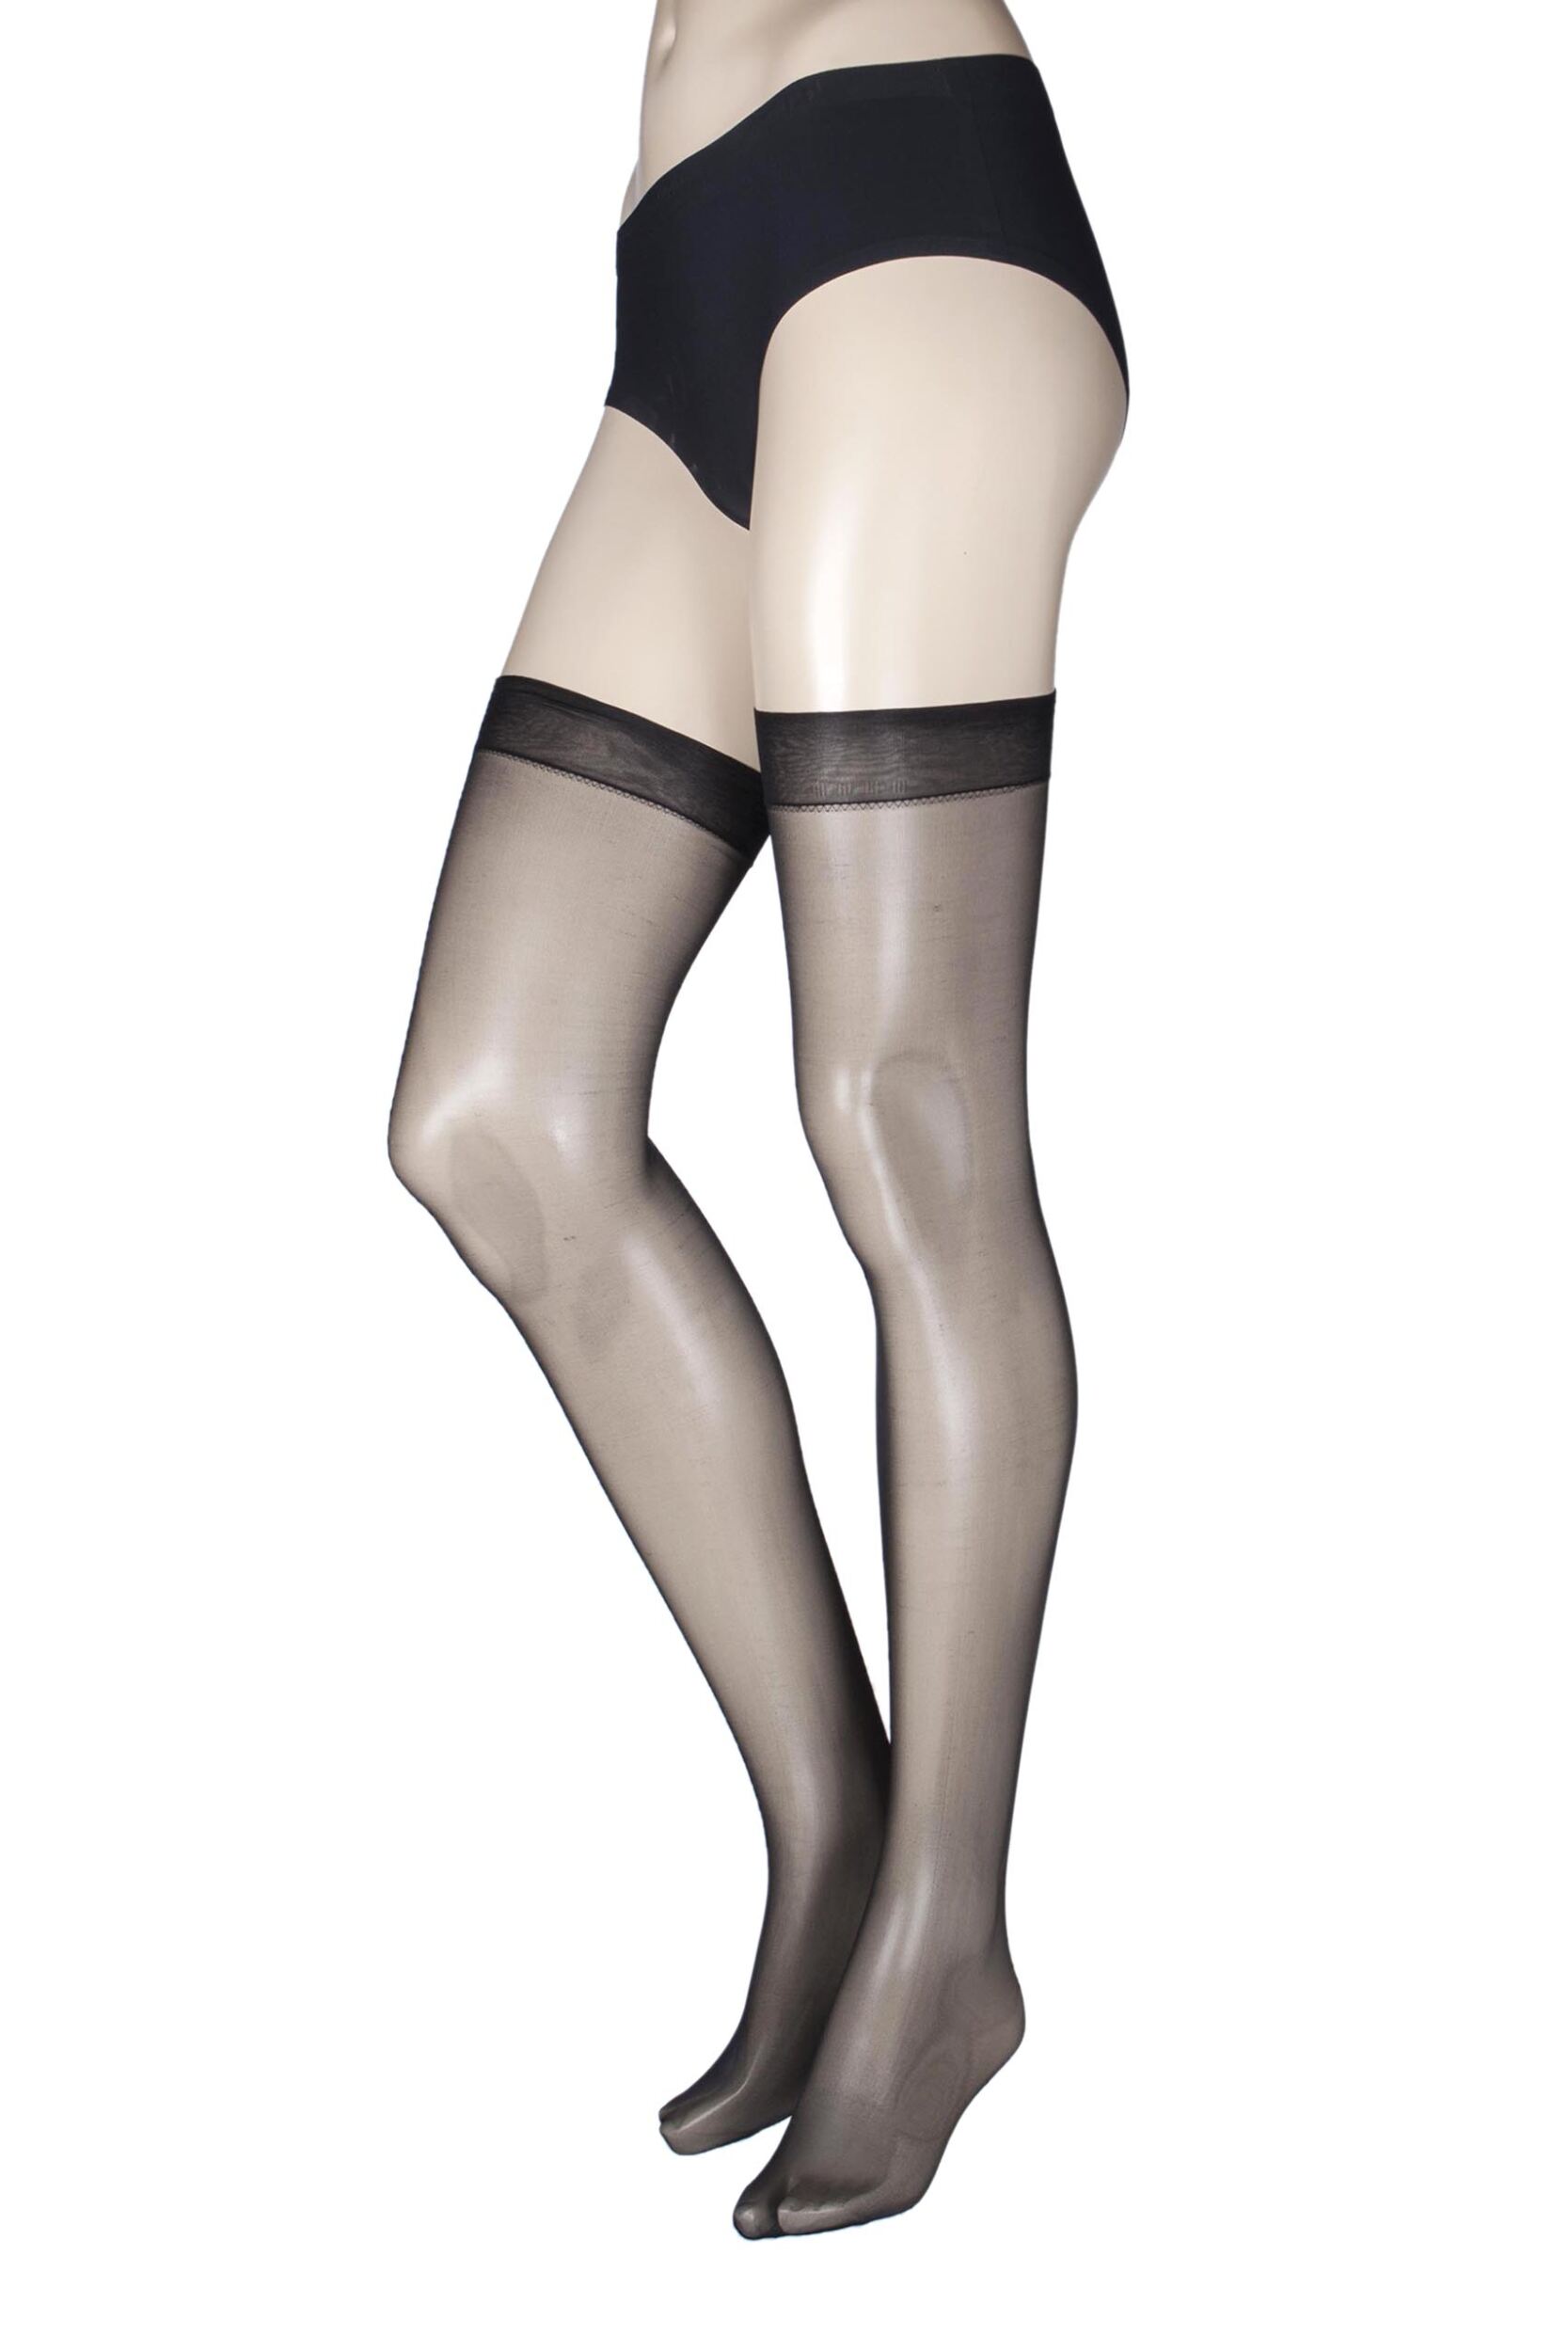 1 Pair Black High Shine Luxury Sheer Stockings - Up to XXXL Ladies XX-Large - Miss Naughty